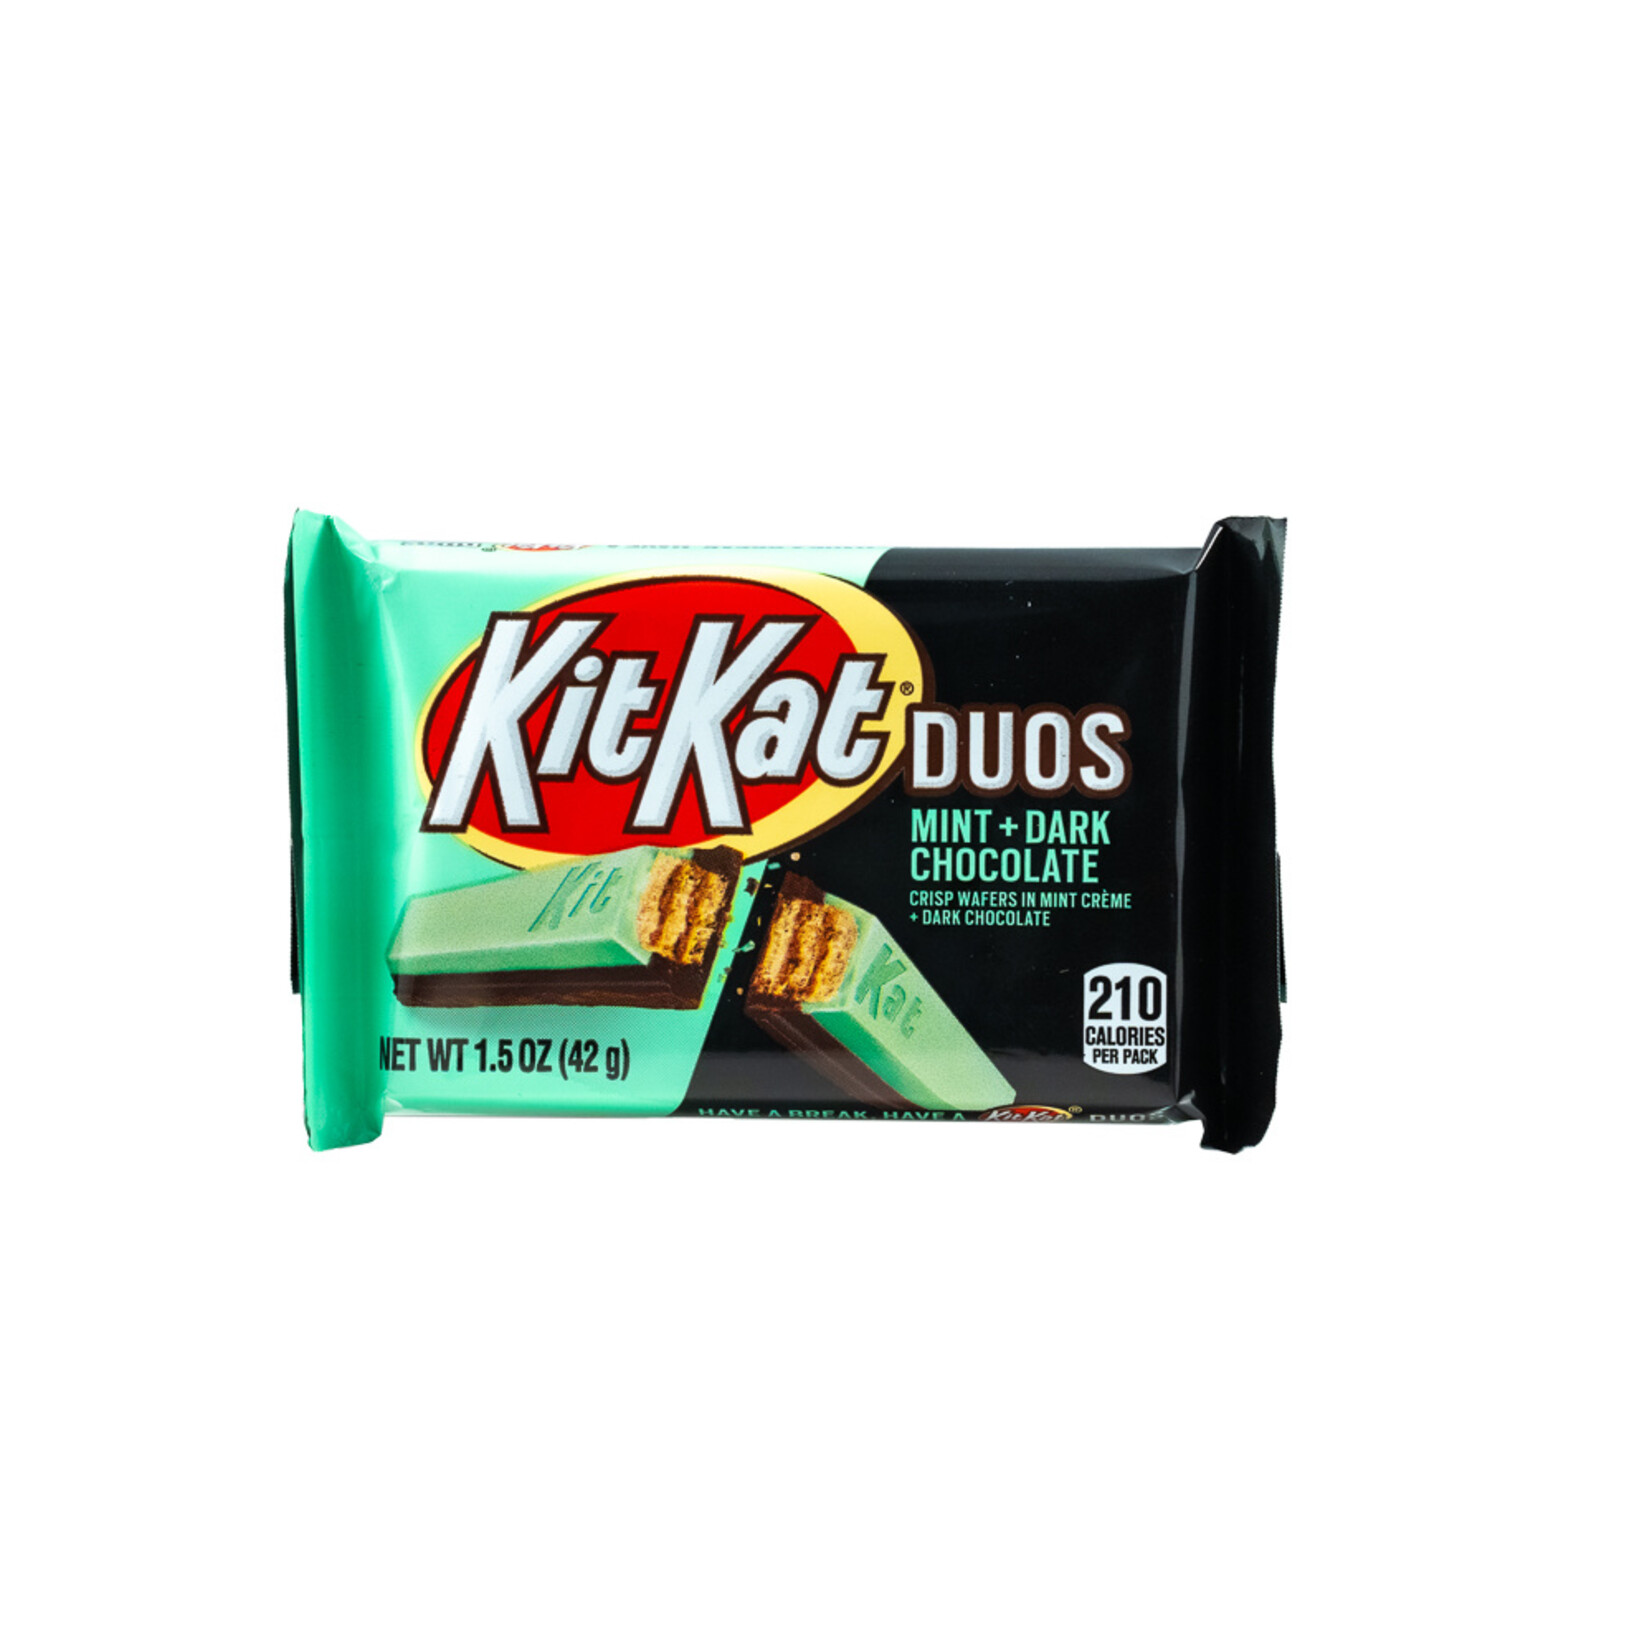 Les Bonbons de Mandy - Chocolat & Caramel - Kit Kat Japonais Chocol